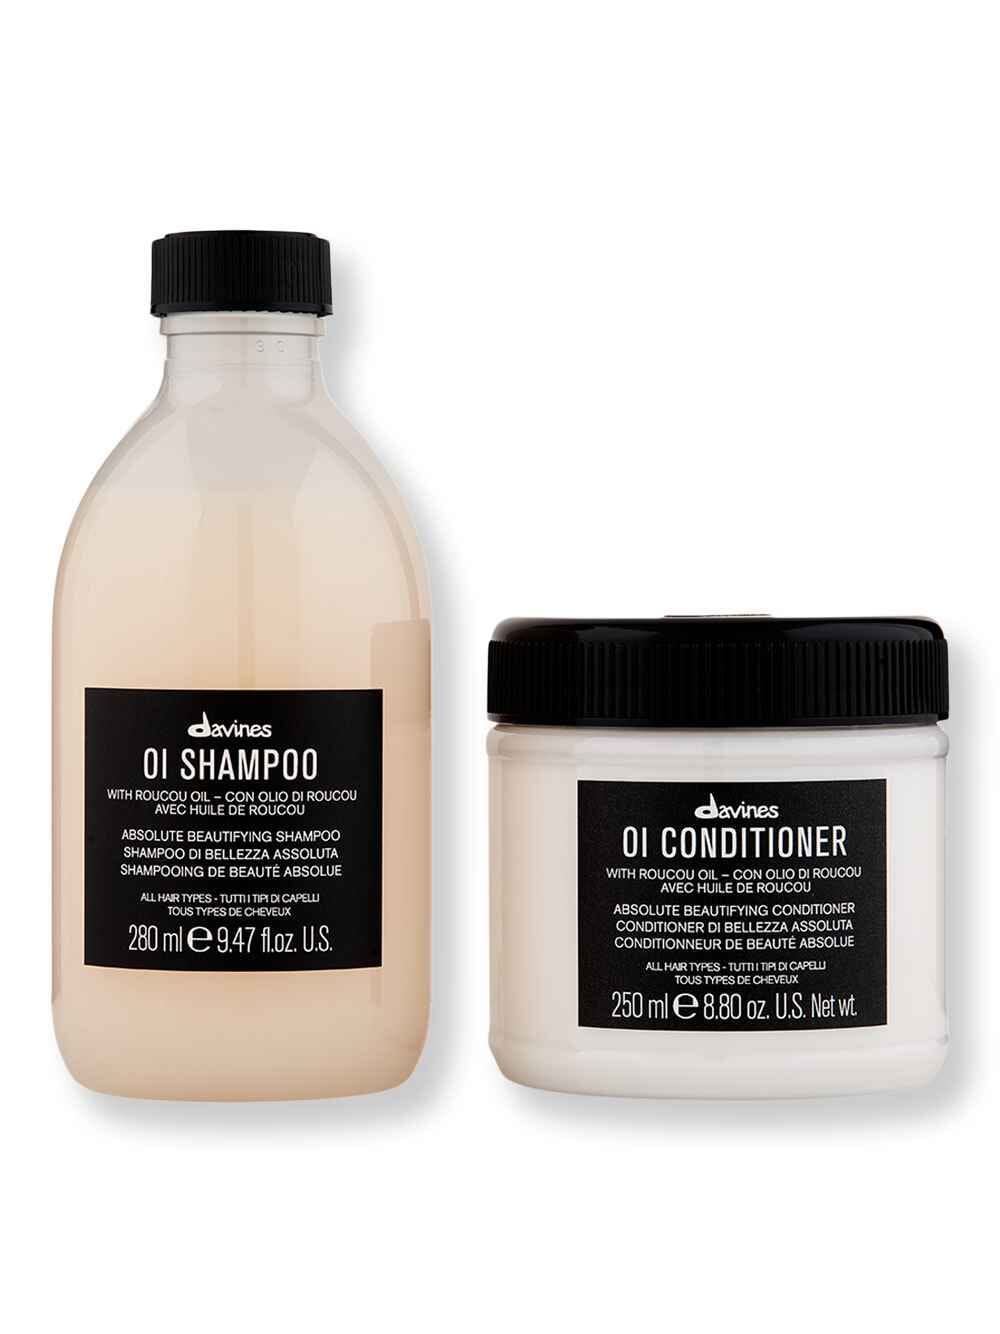 Davines Davines OI Shampoo 280 ml & Conditioner 250 ml Hair Care Value Sets 